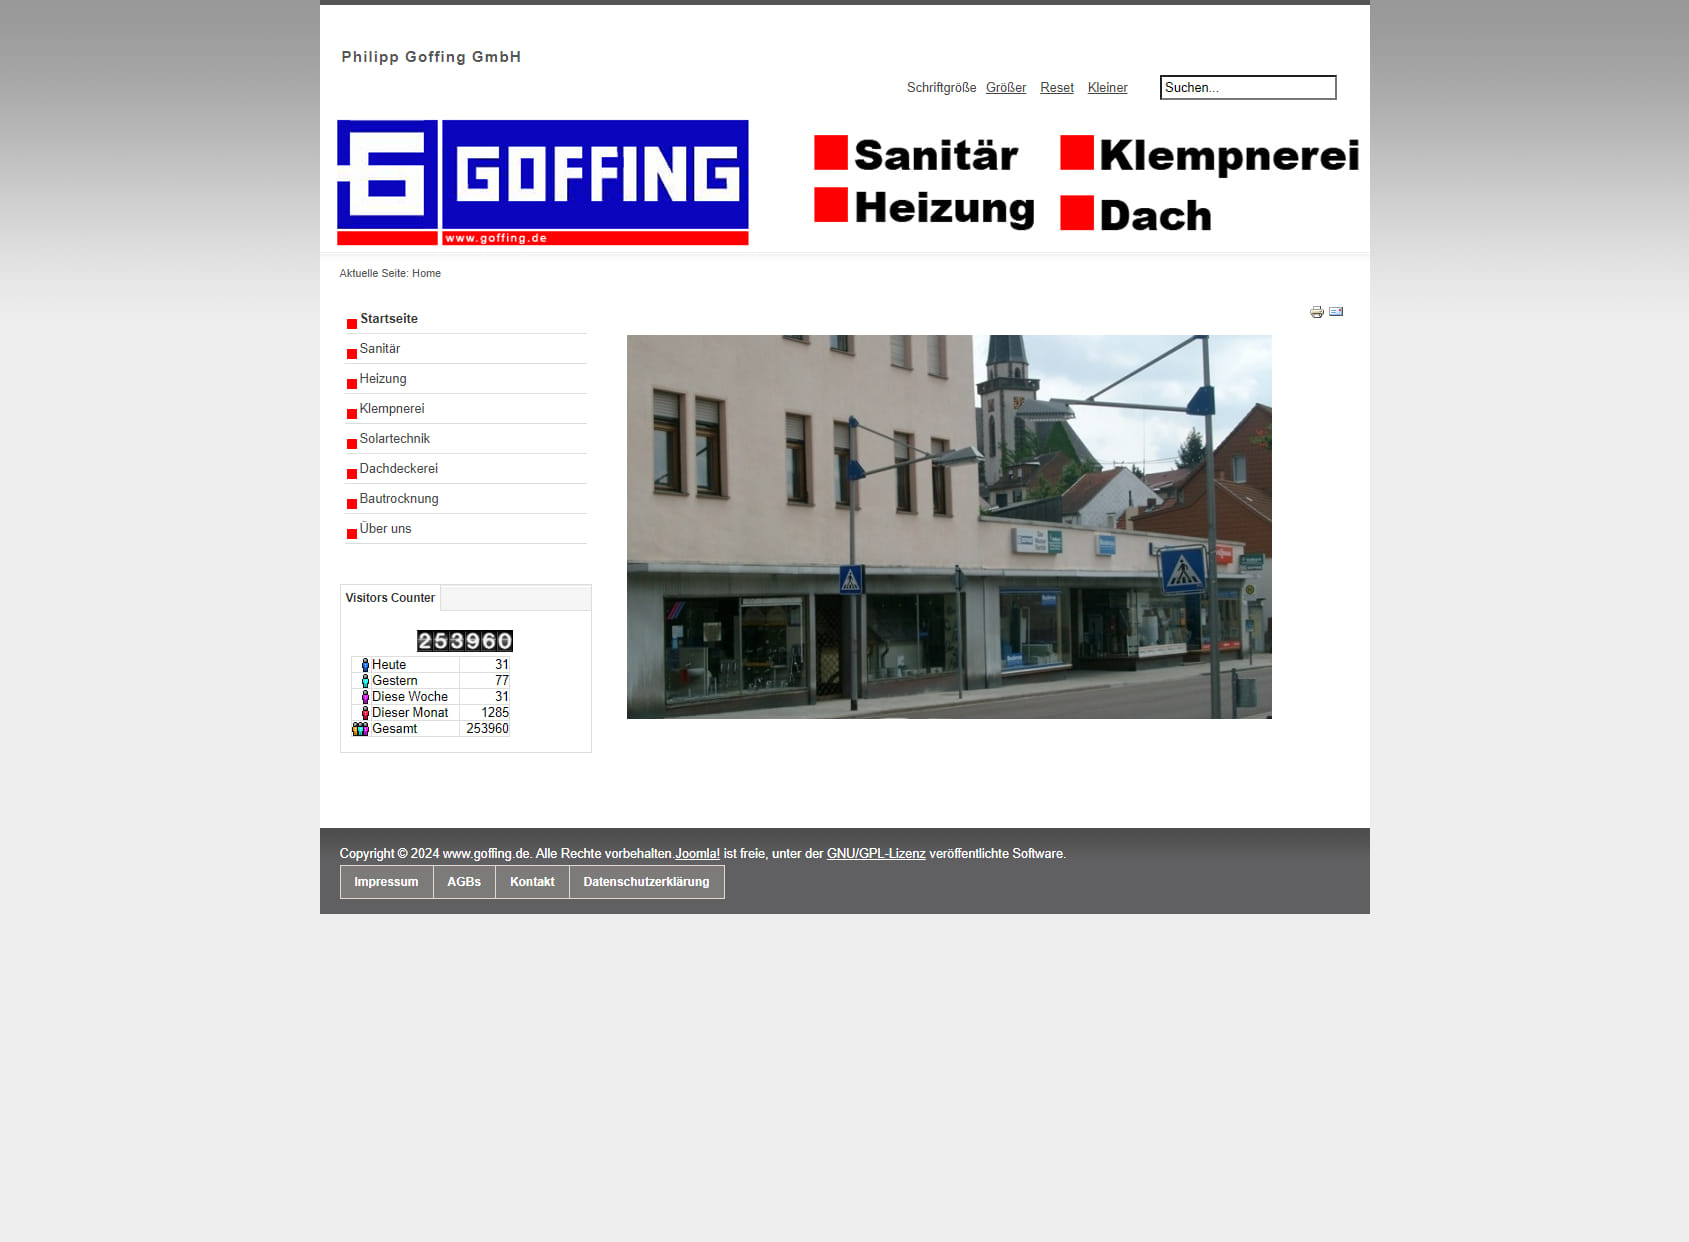 Goffing Philipp GmbH